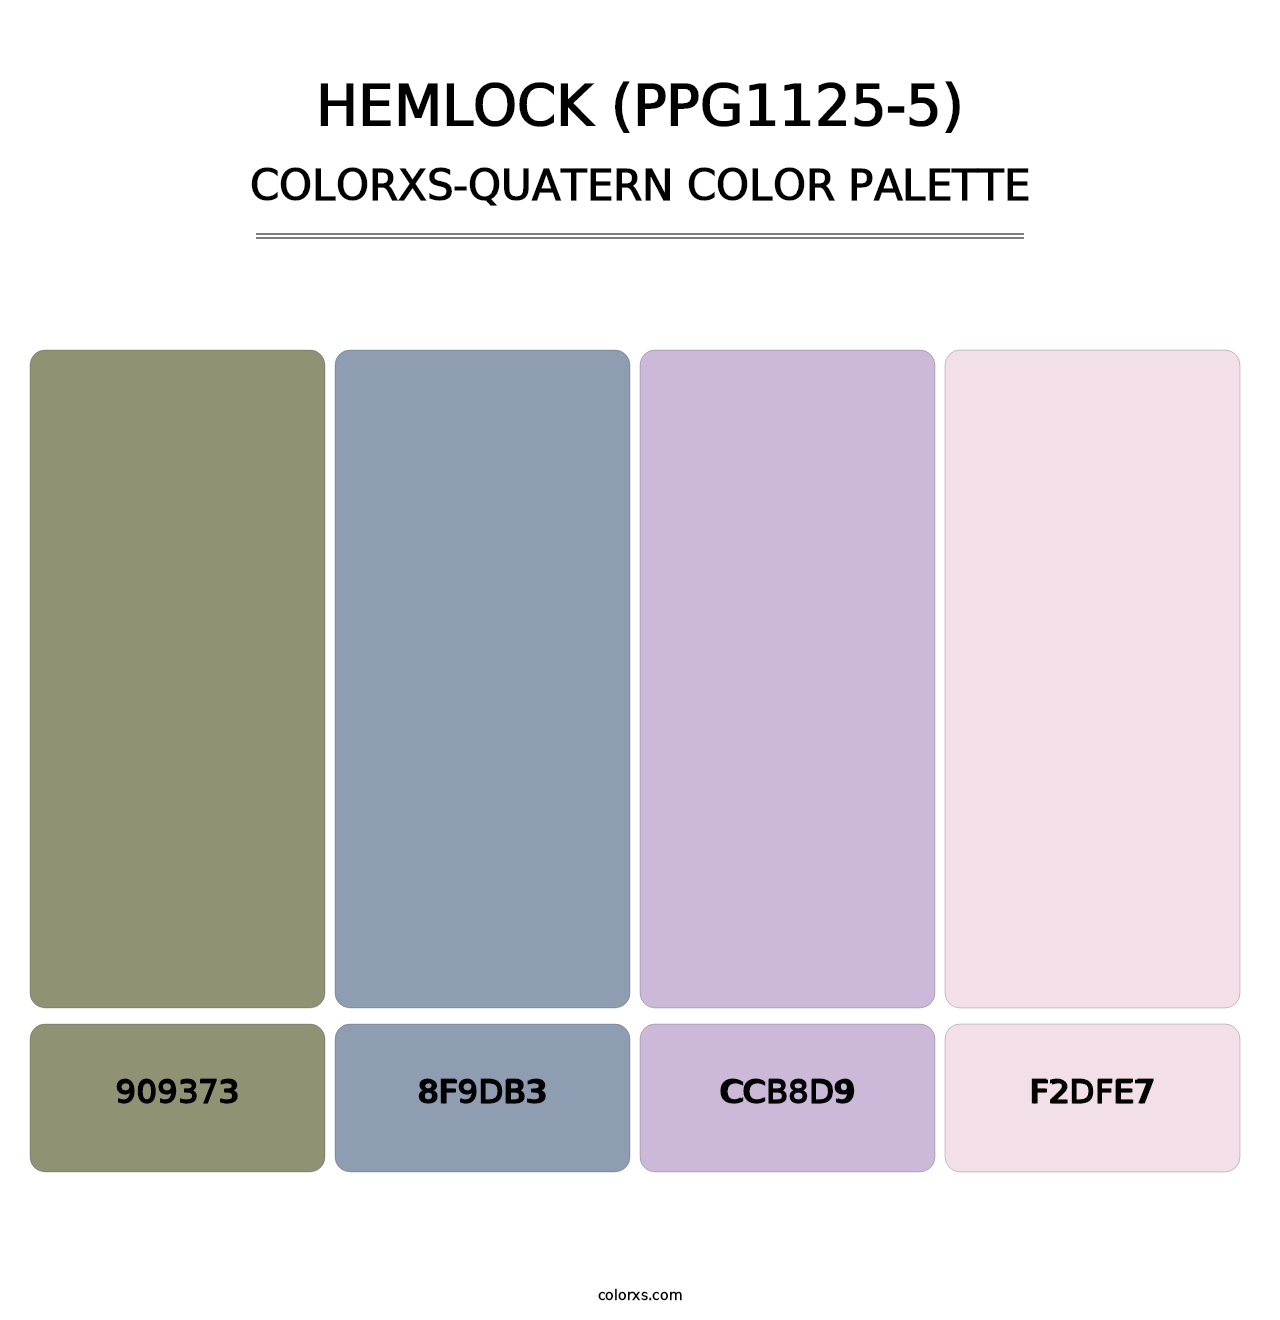 Hemlock (PPG1125-5) - Colorxs Quatern Palette